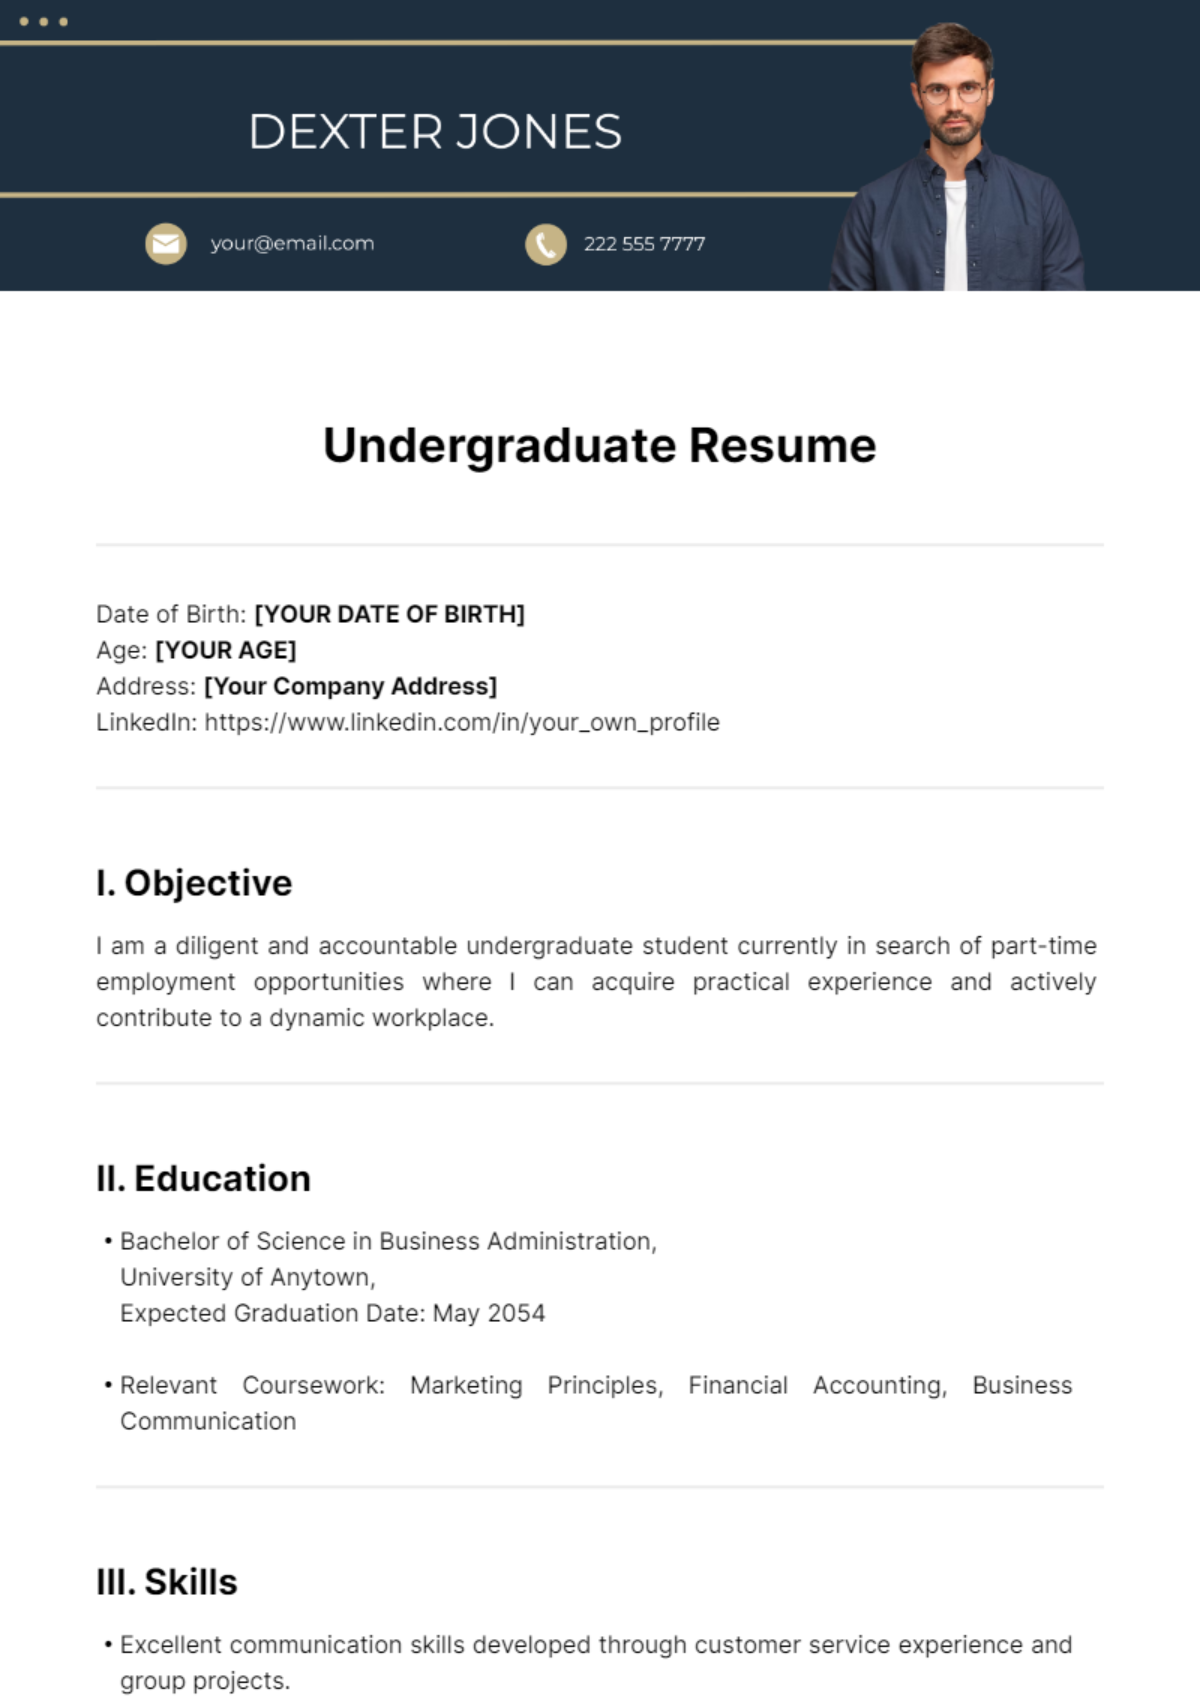 Undergraduate Resume Template